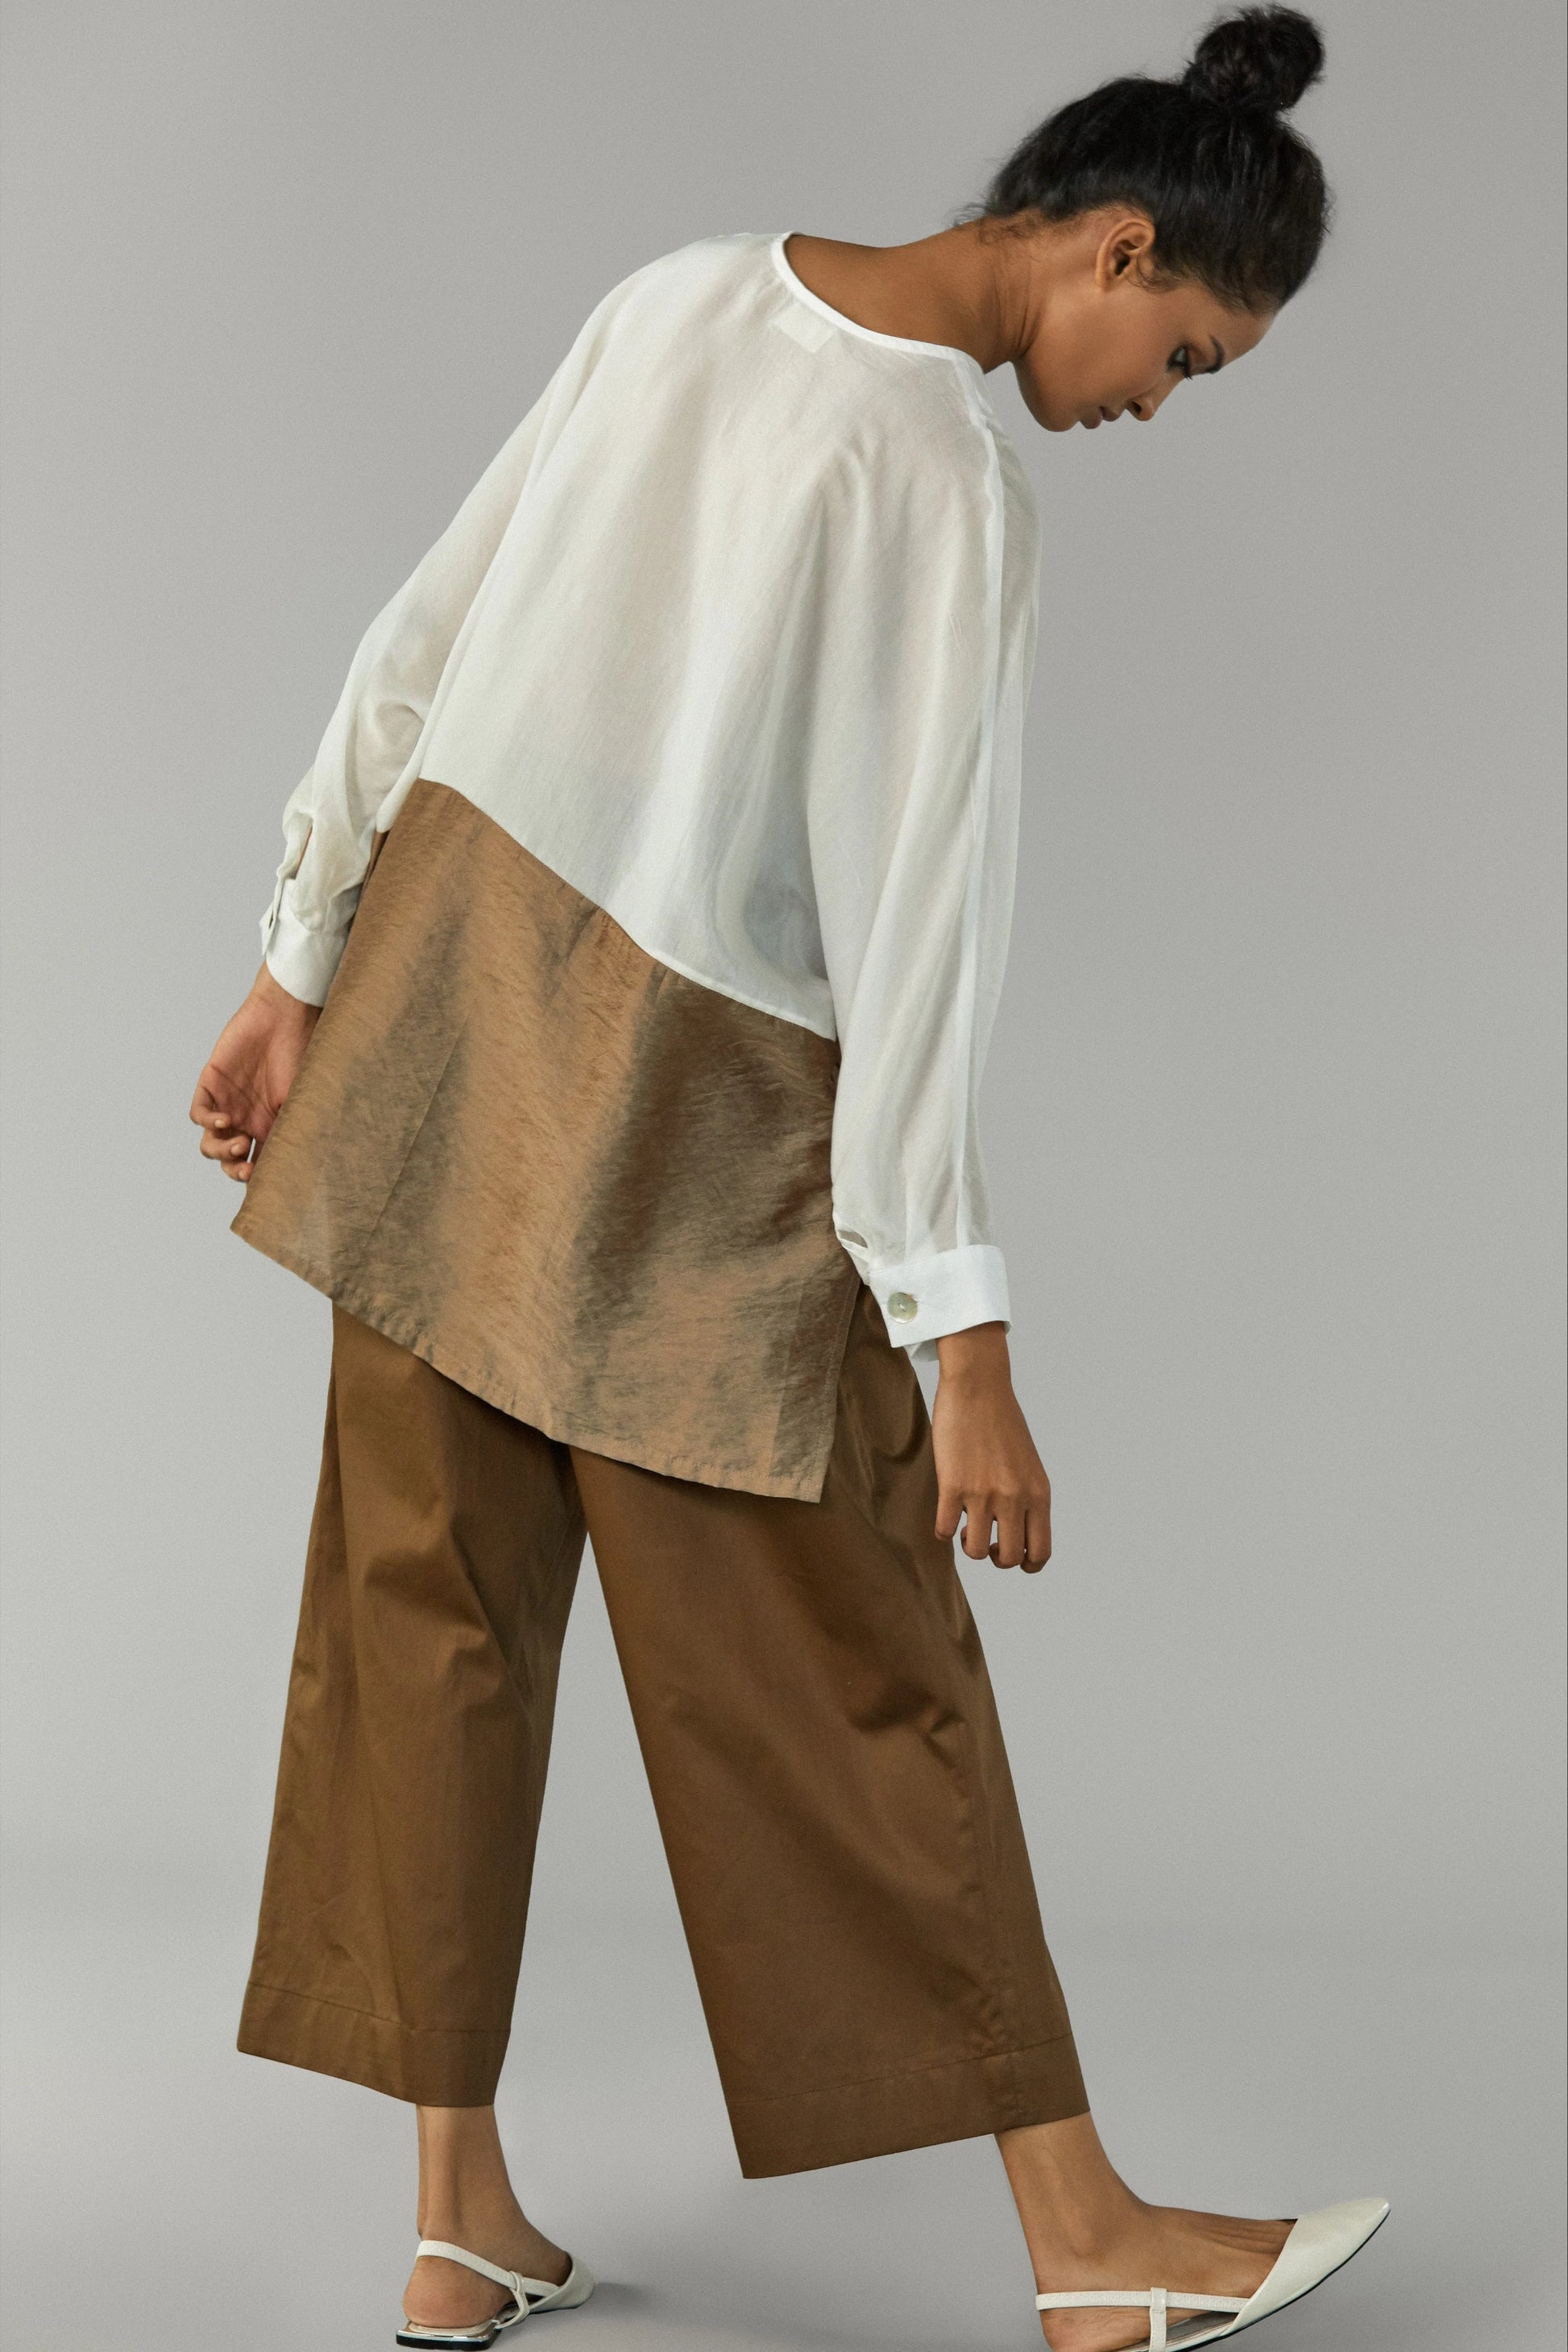 Sample of Brown Cotton Pants - B E N N C H